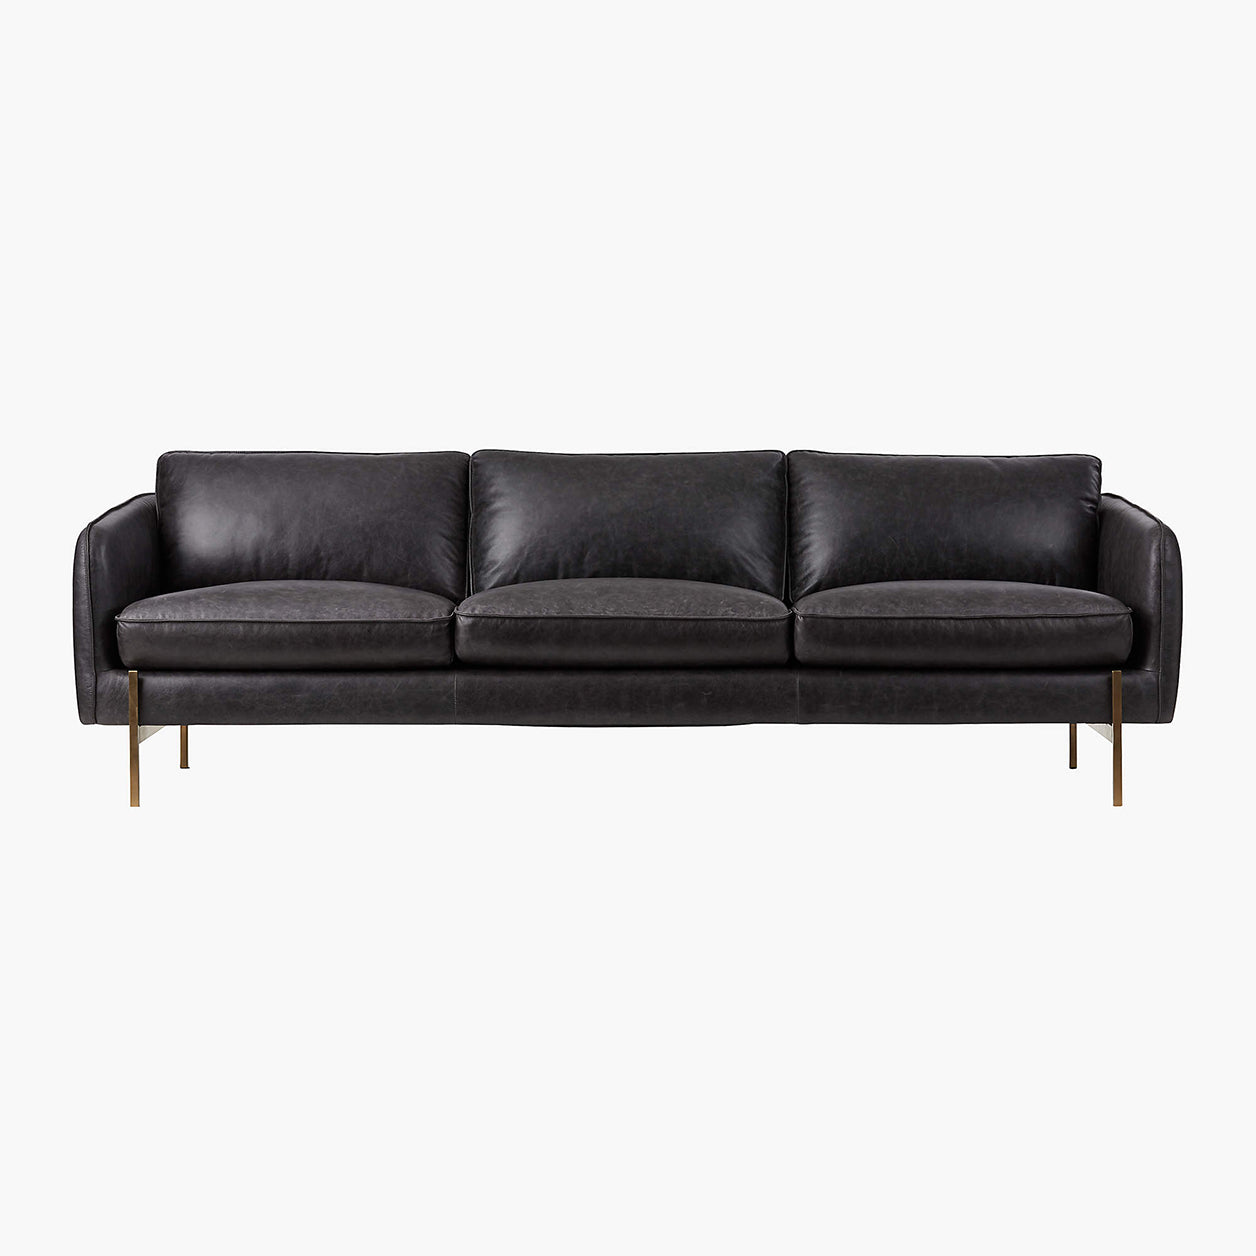 The Standard sofa